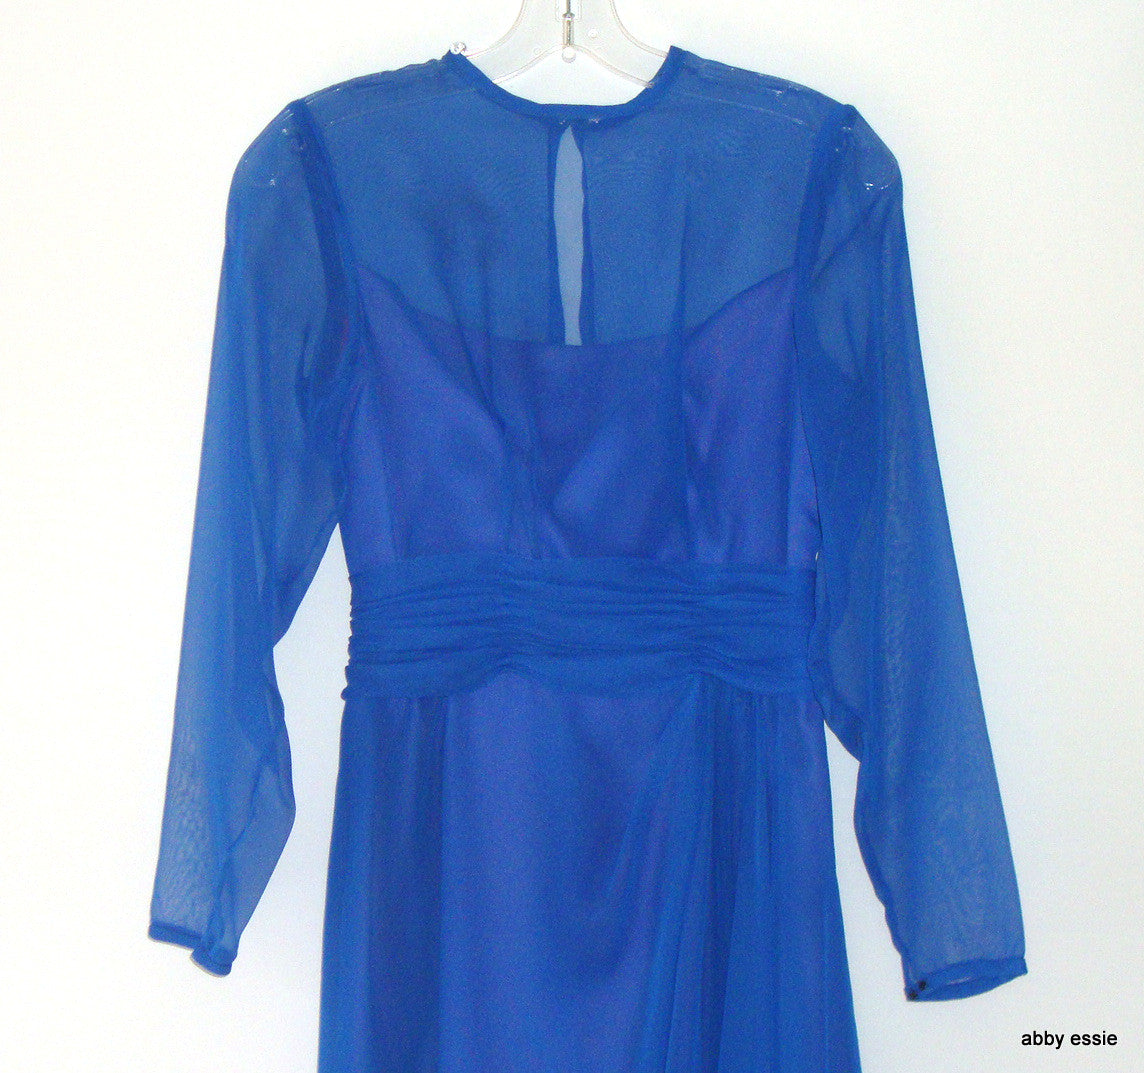 Vintage Alyce Designs Blue 50s 60s 70s Style Sheer Dress Sz 8 Ld-2722 Abby Essie